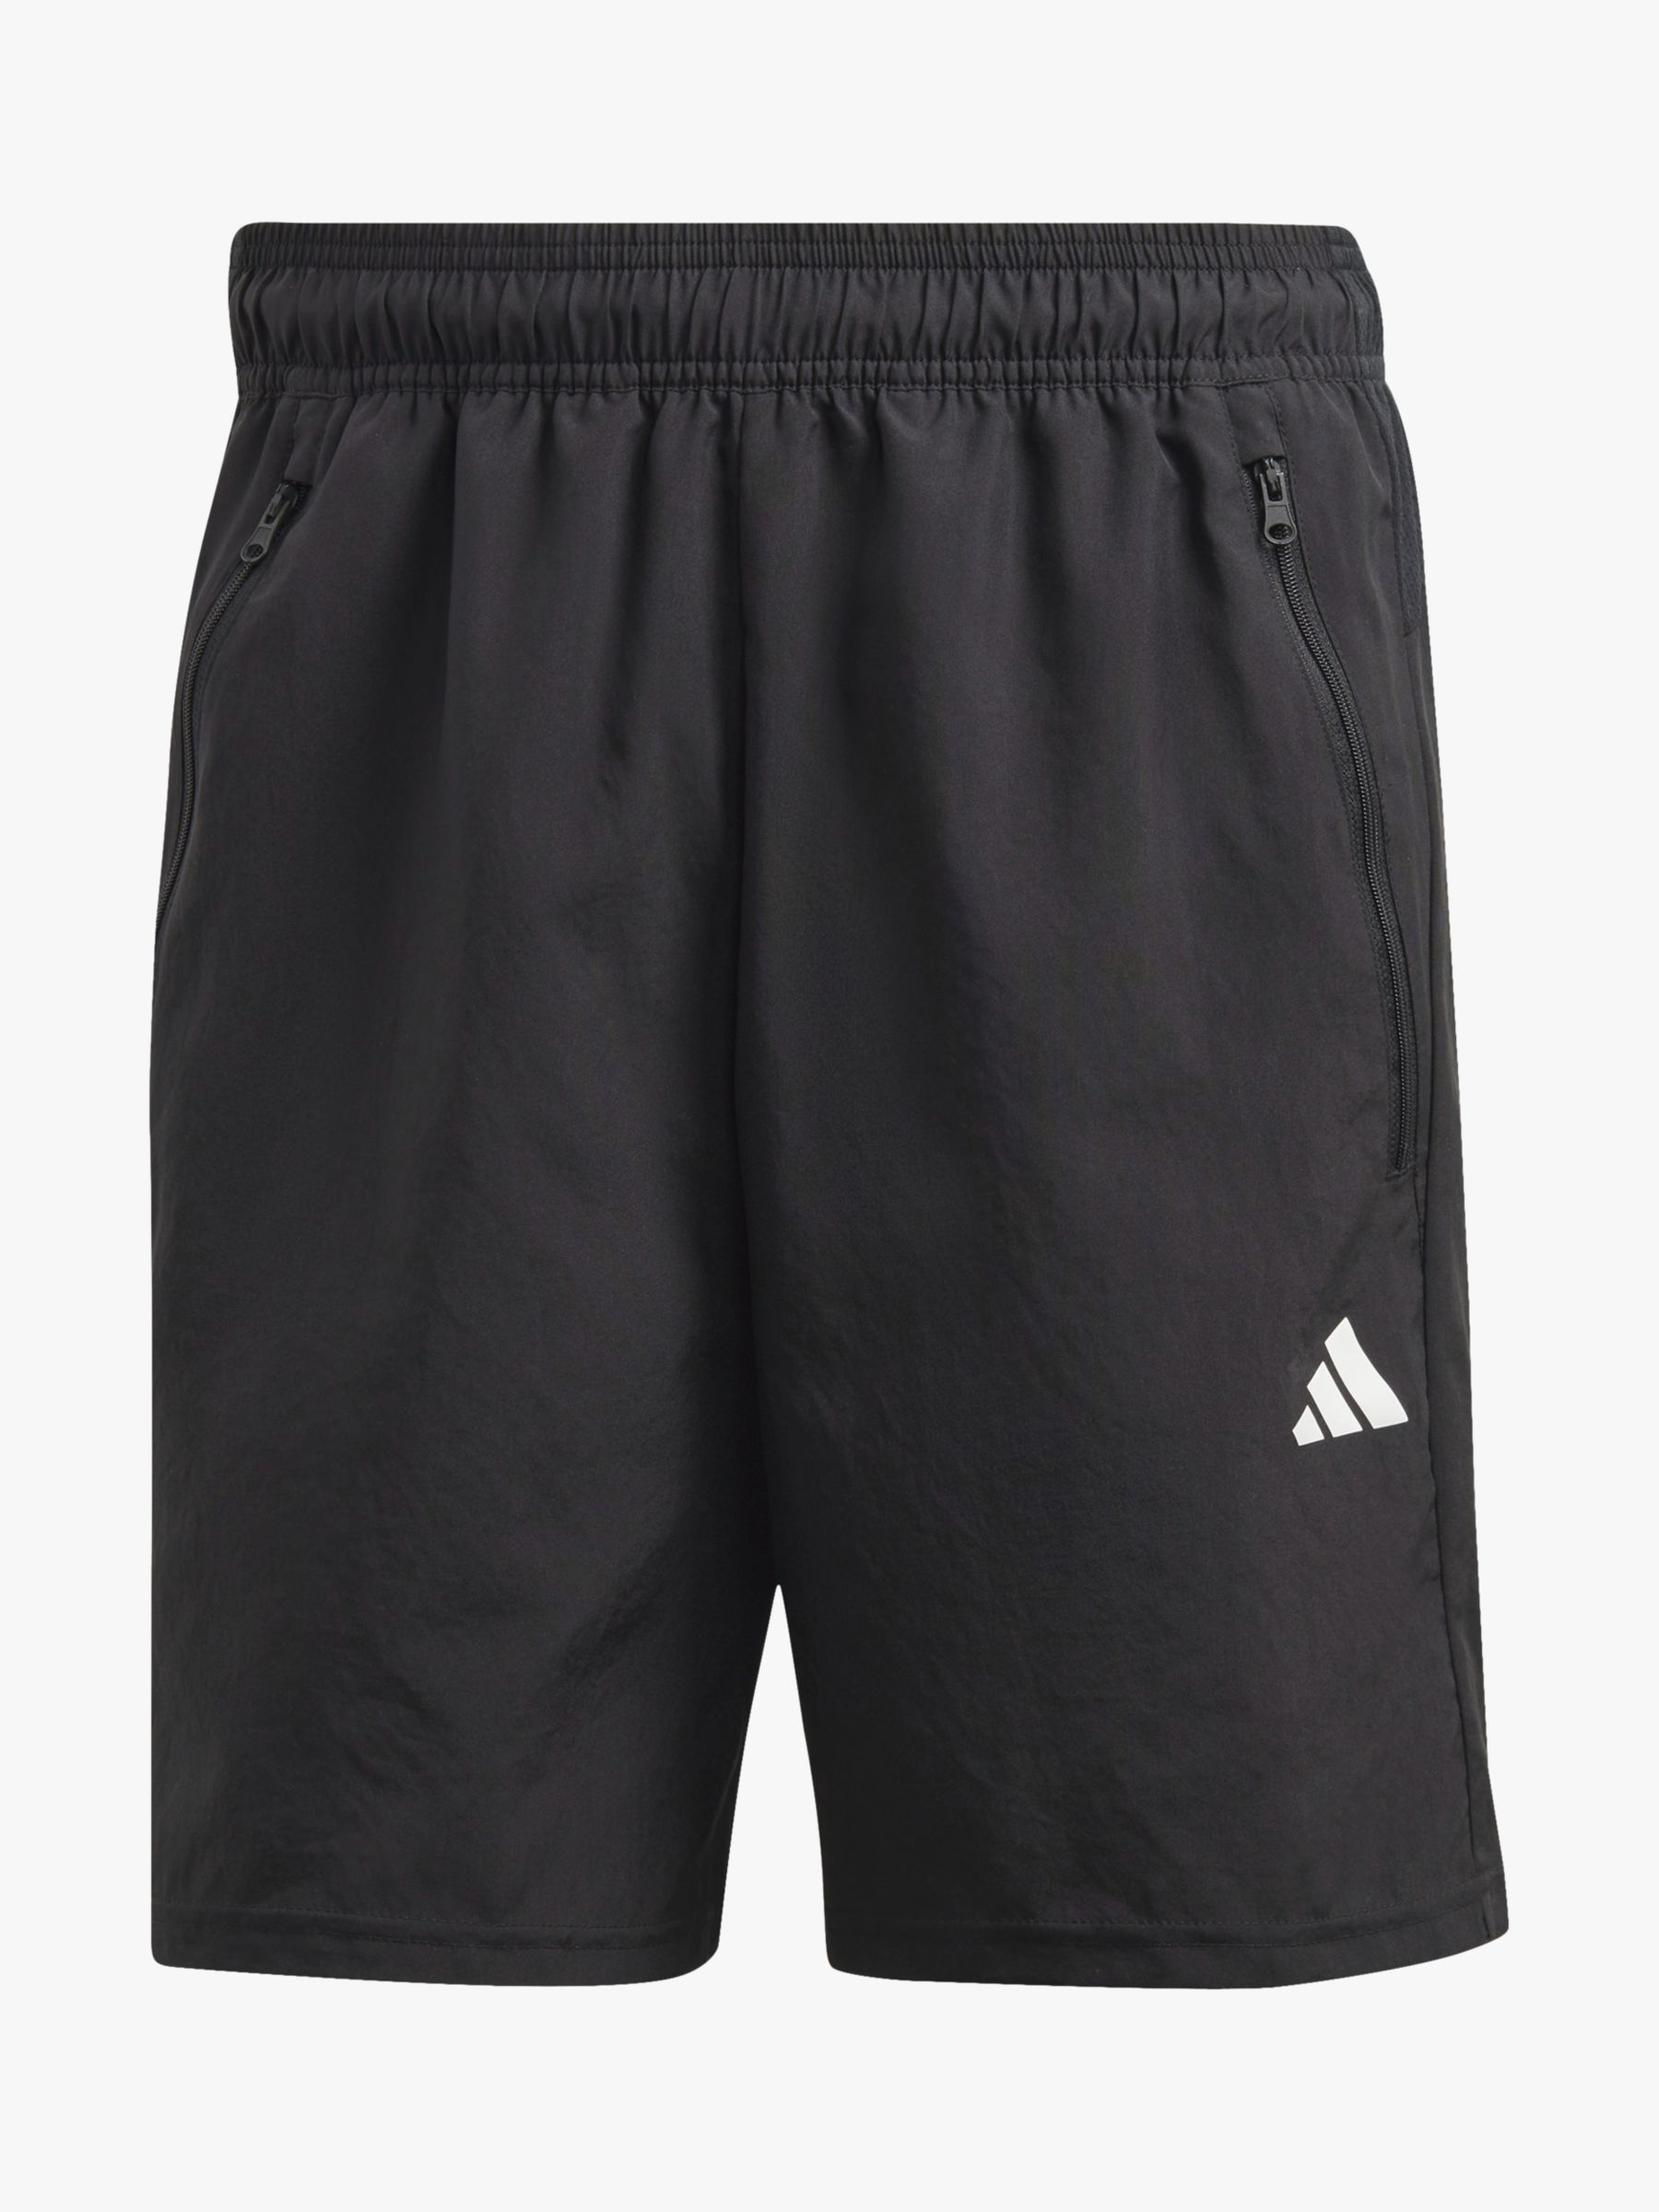 adidas AEROREADY Designed to Move Woven Sport Shorts - Blue | Men's  Training | adidas US